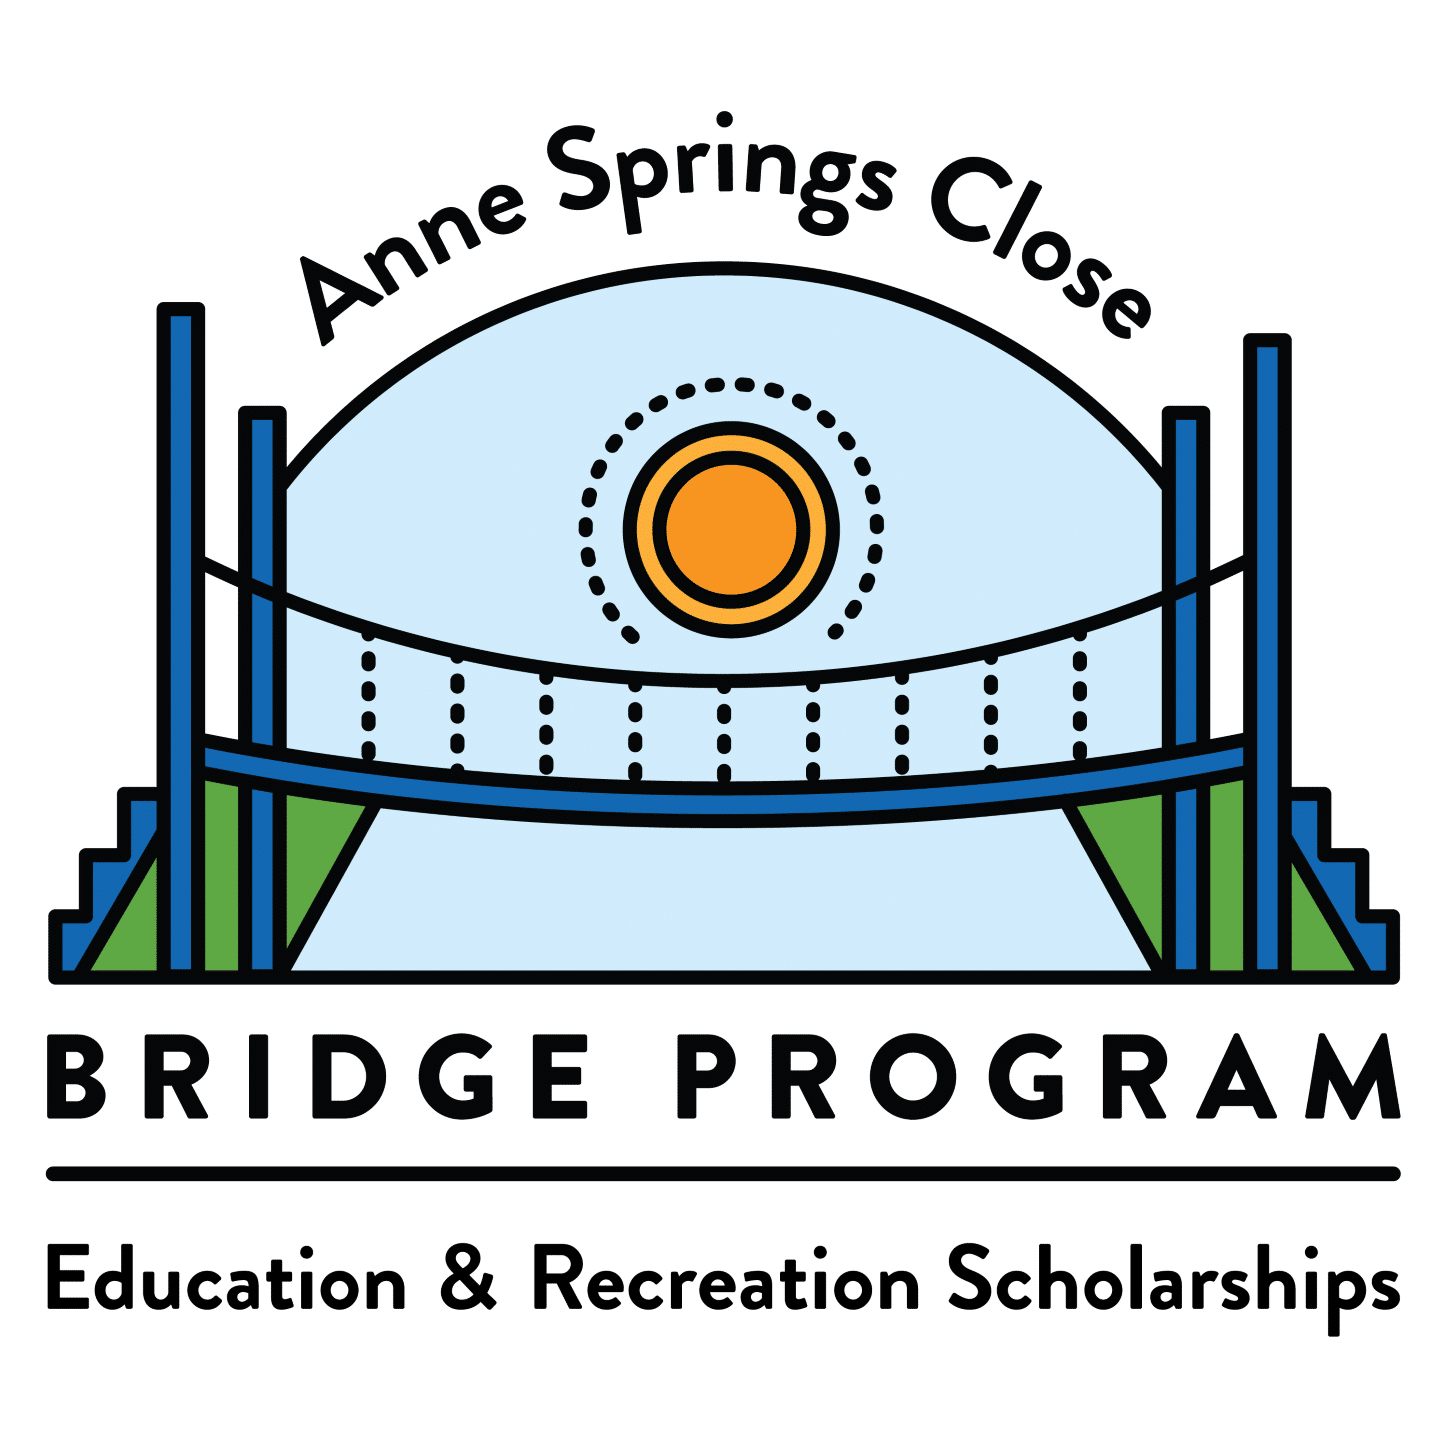 What is the Anne Springs Close Bridge Program?